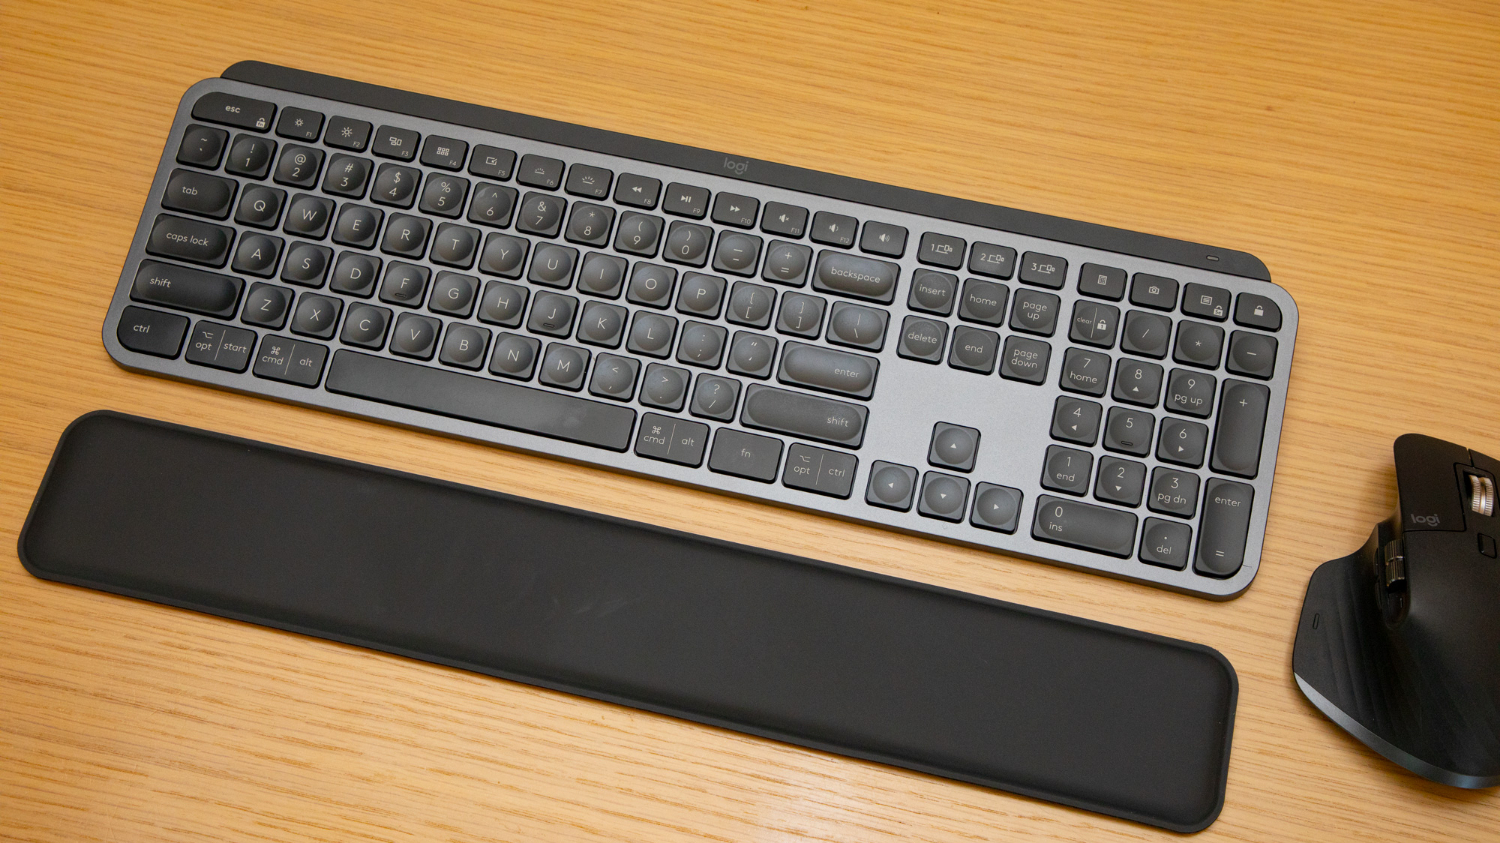 Logitech MX Keys Keyboard and MX Palm Rest Offer Low-Profile